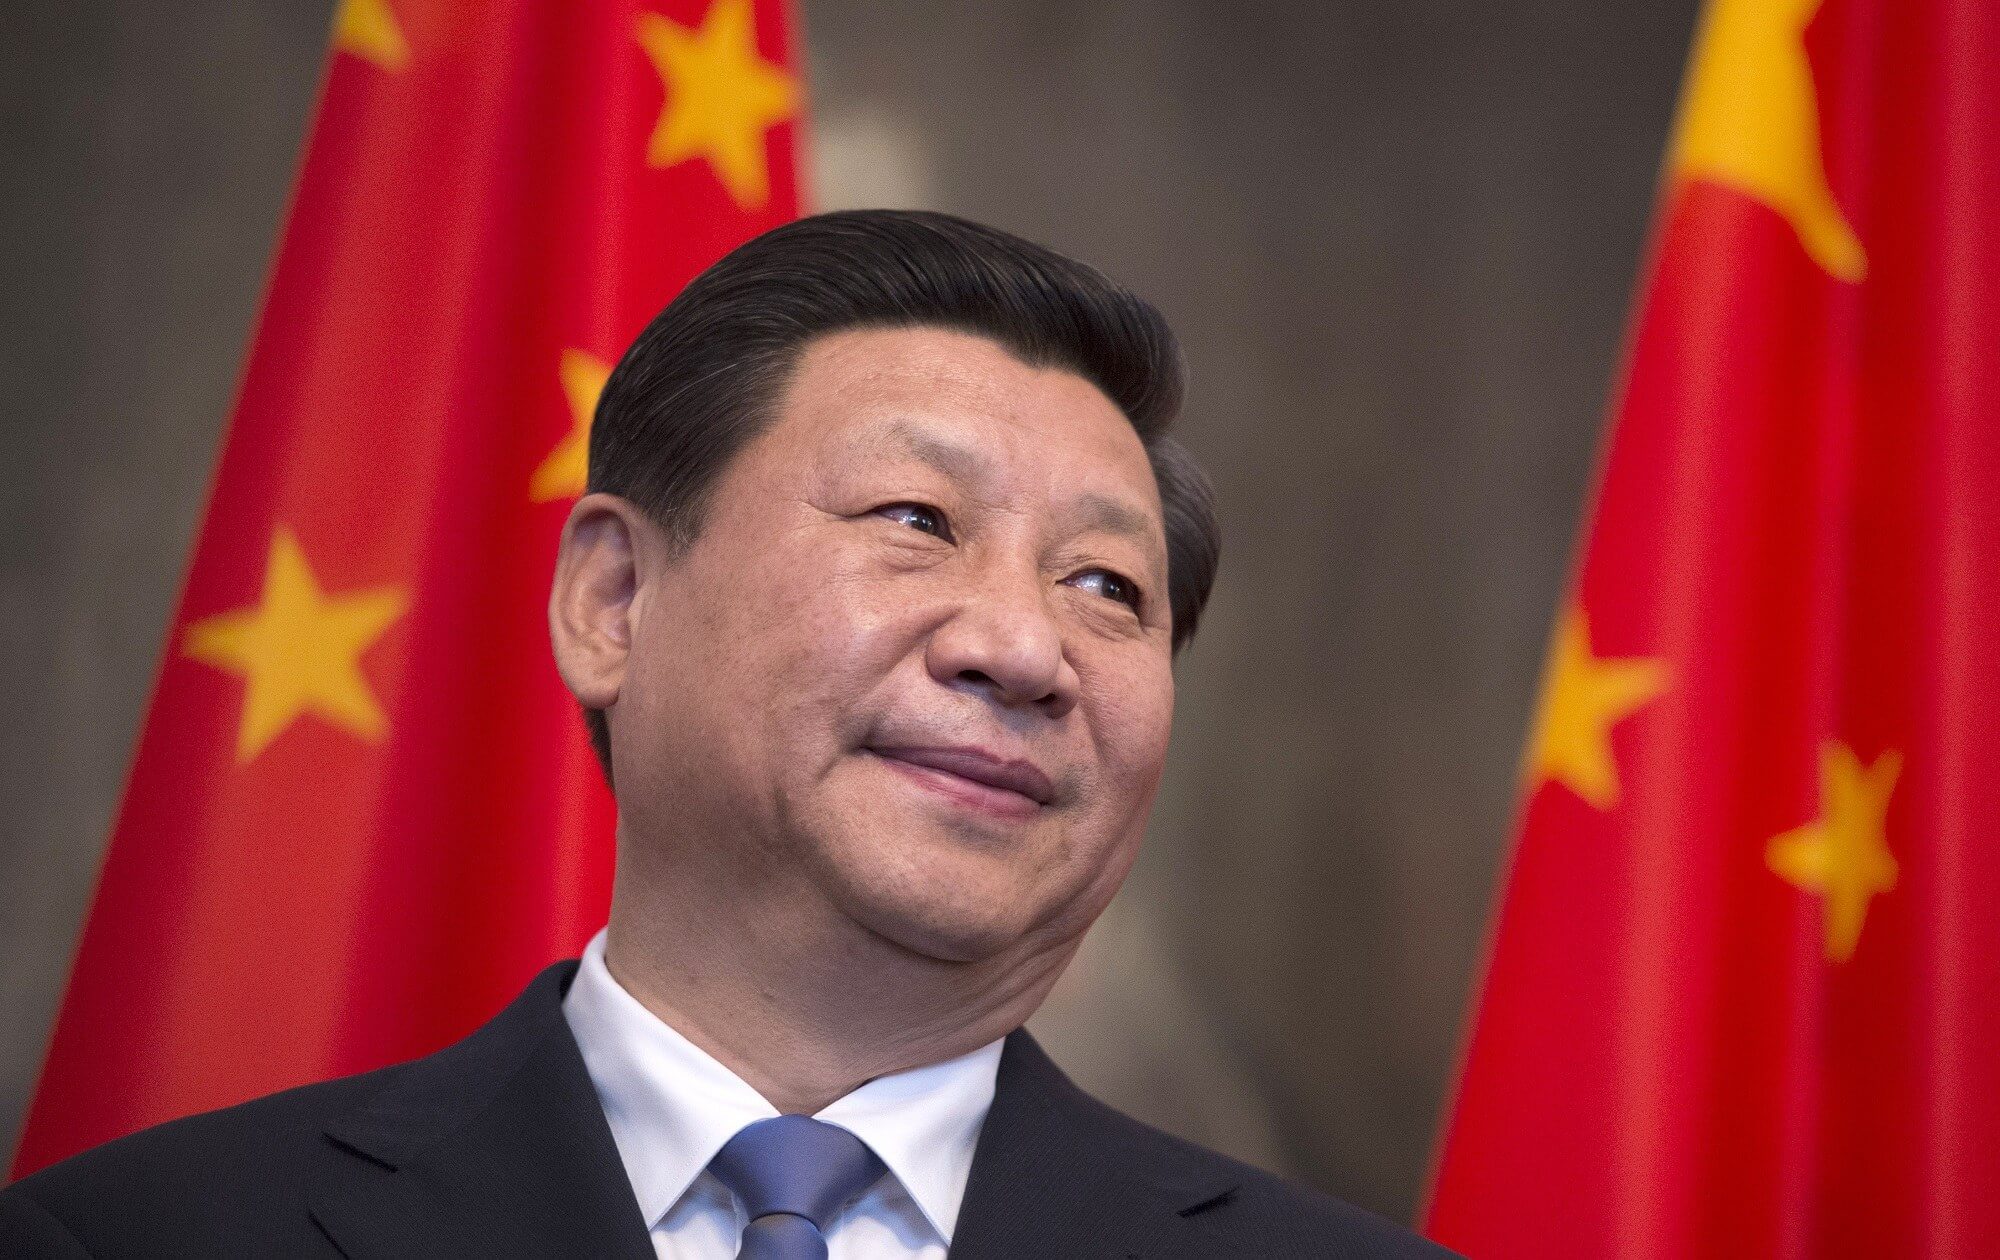 China jails University of Minnesota student over tweets mocking President Xi Jinping